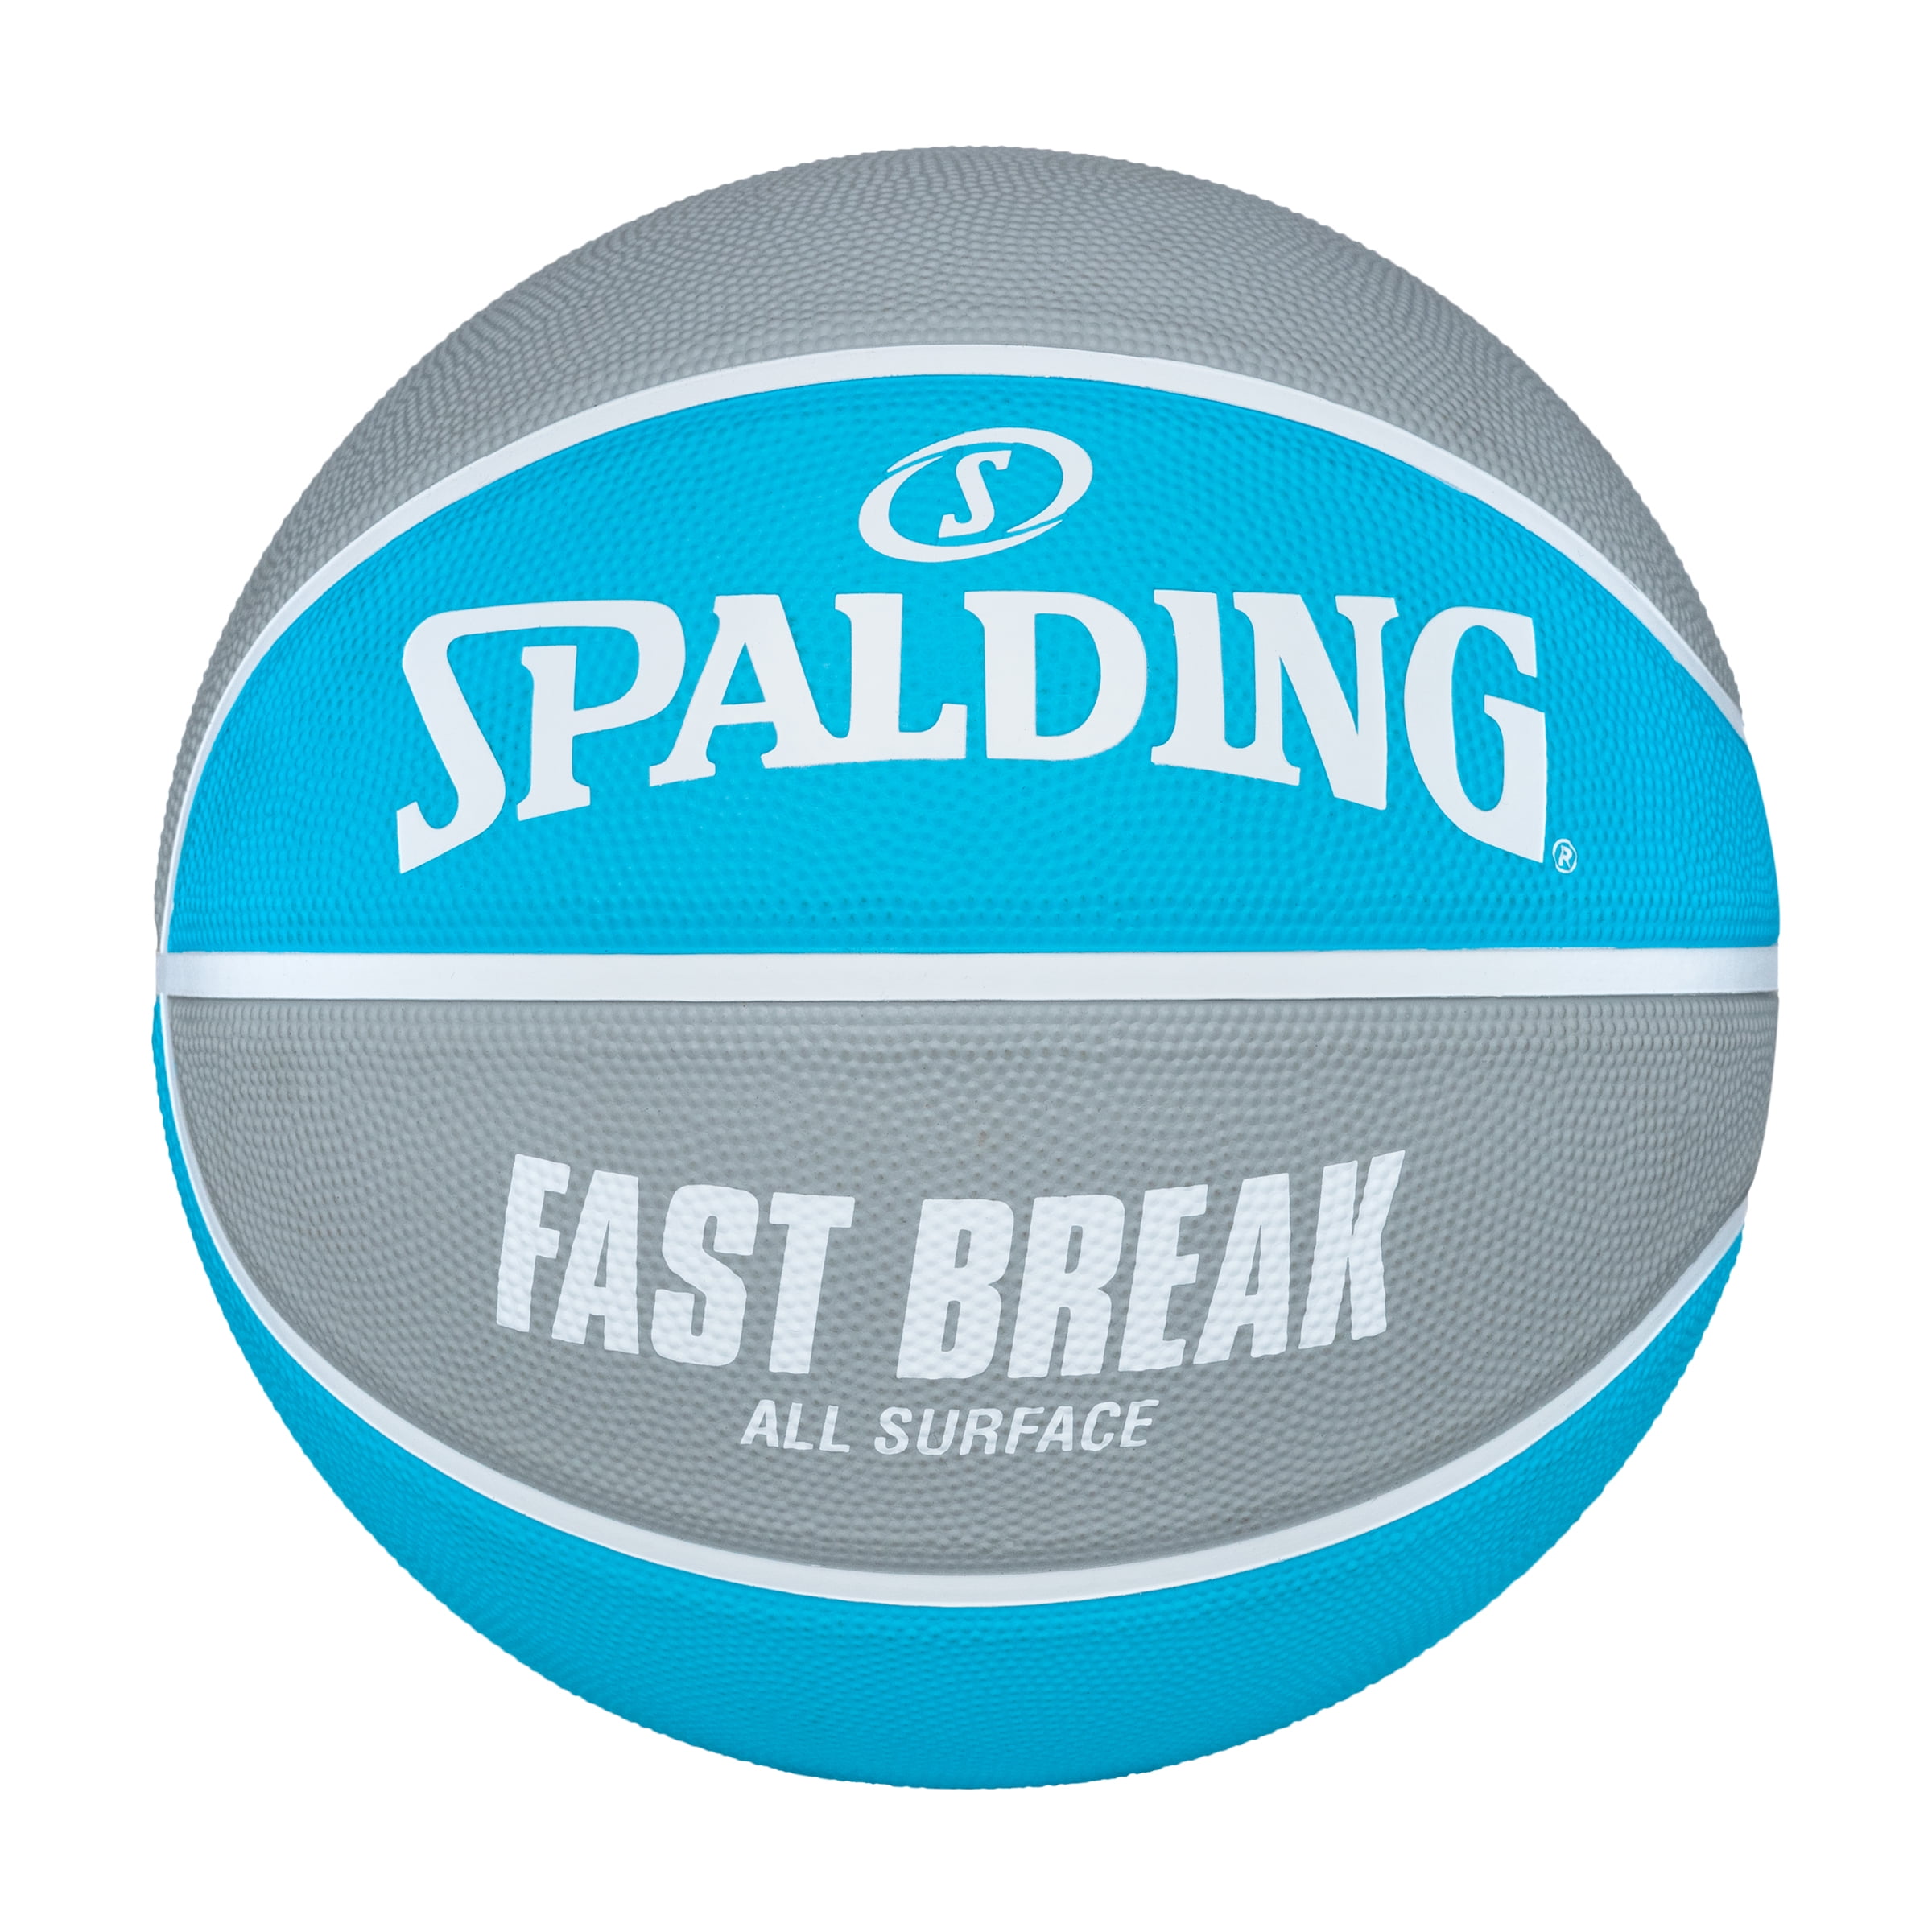 Spalding Fast Break All Surface Blue/Silver Basketball 29.5